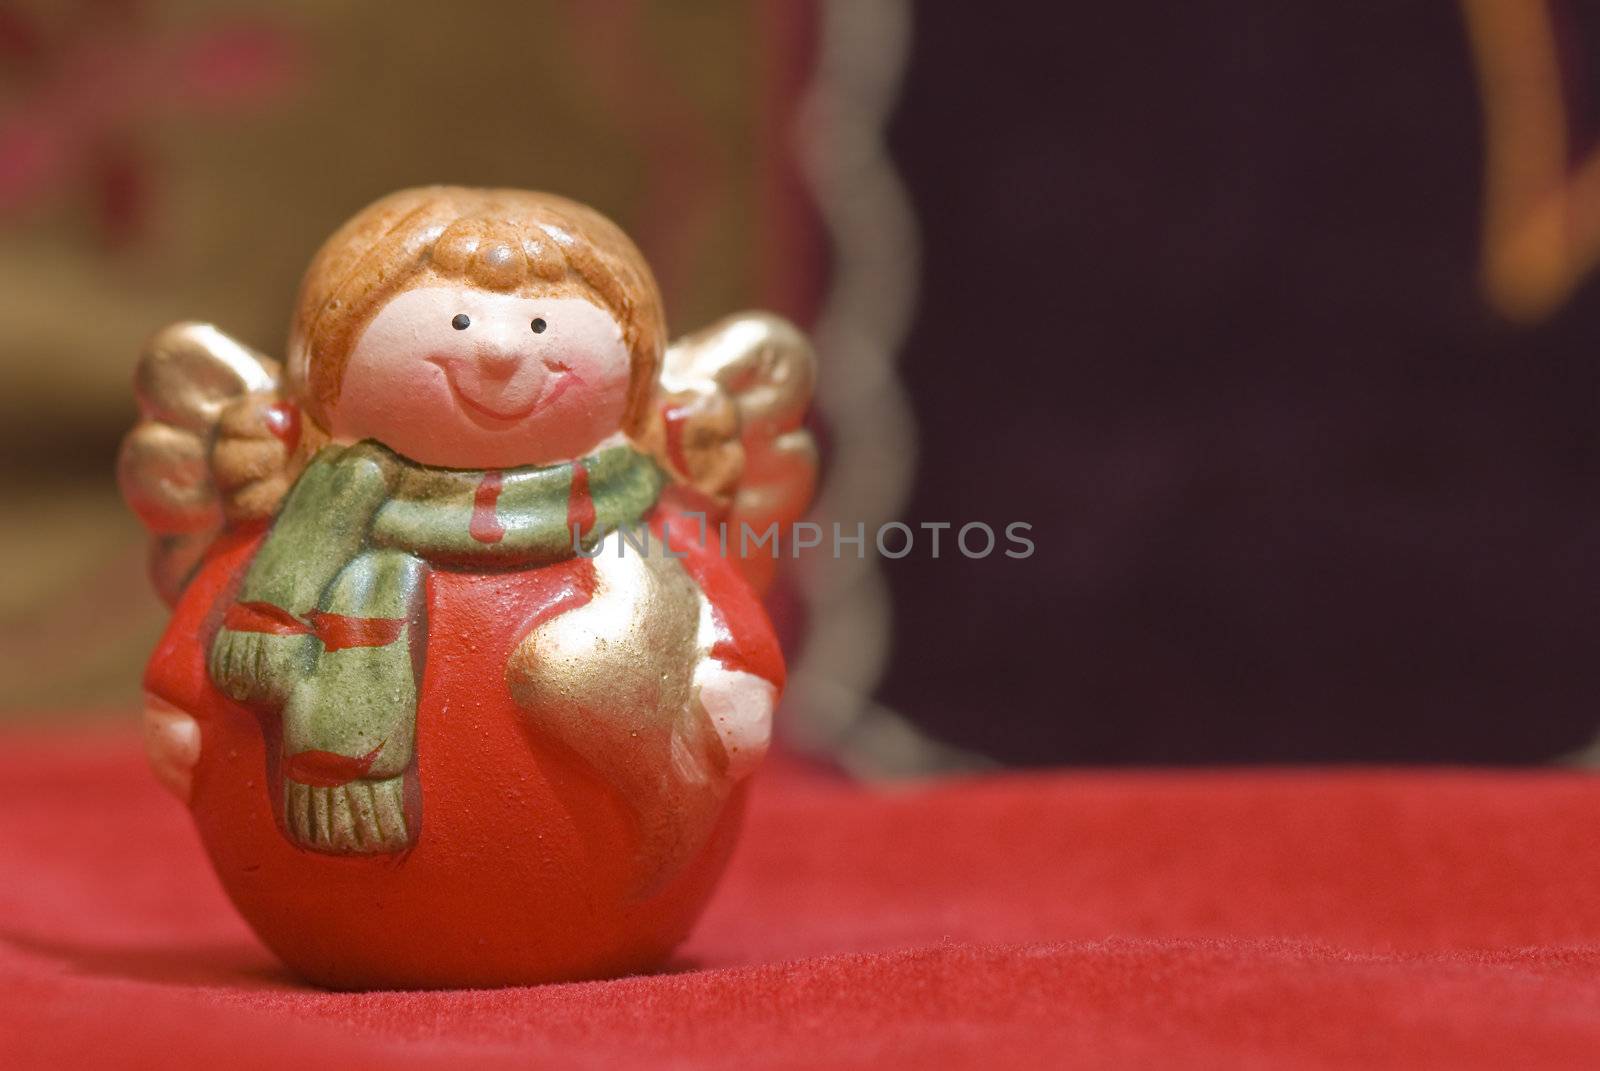 Christmas decoration, a smiling angel figurine